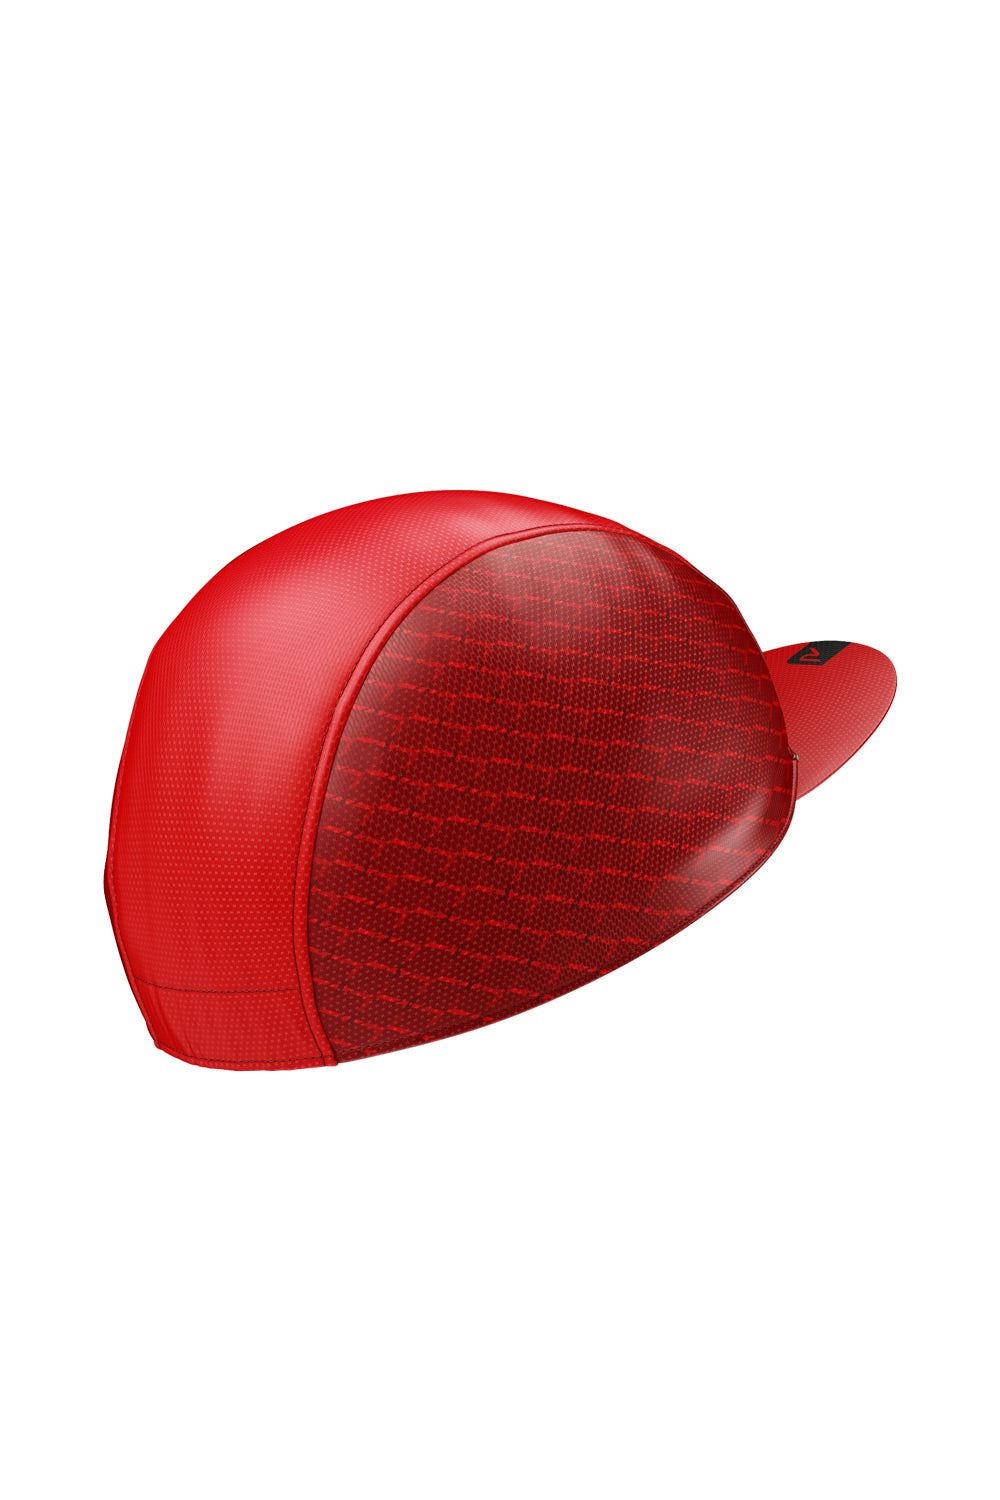 REDY cycling cap